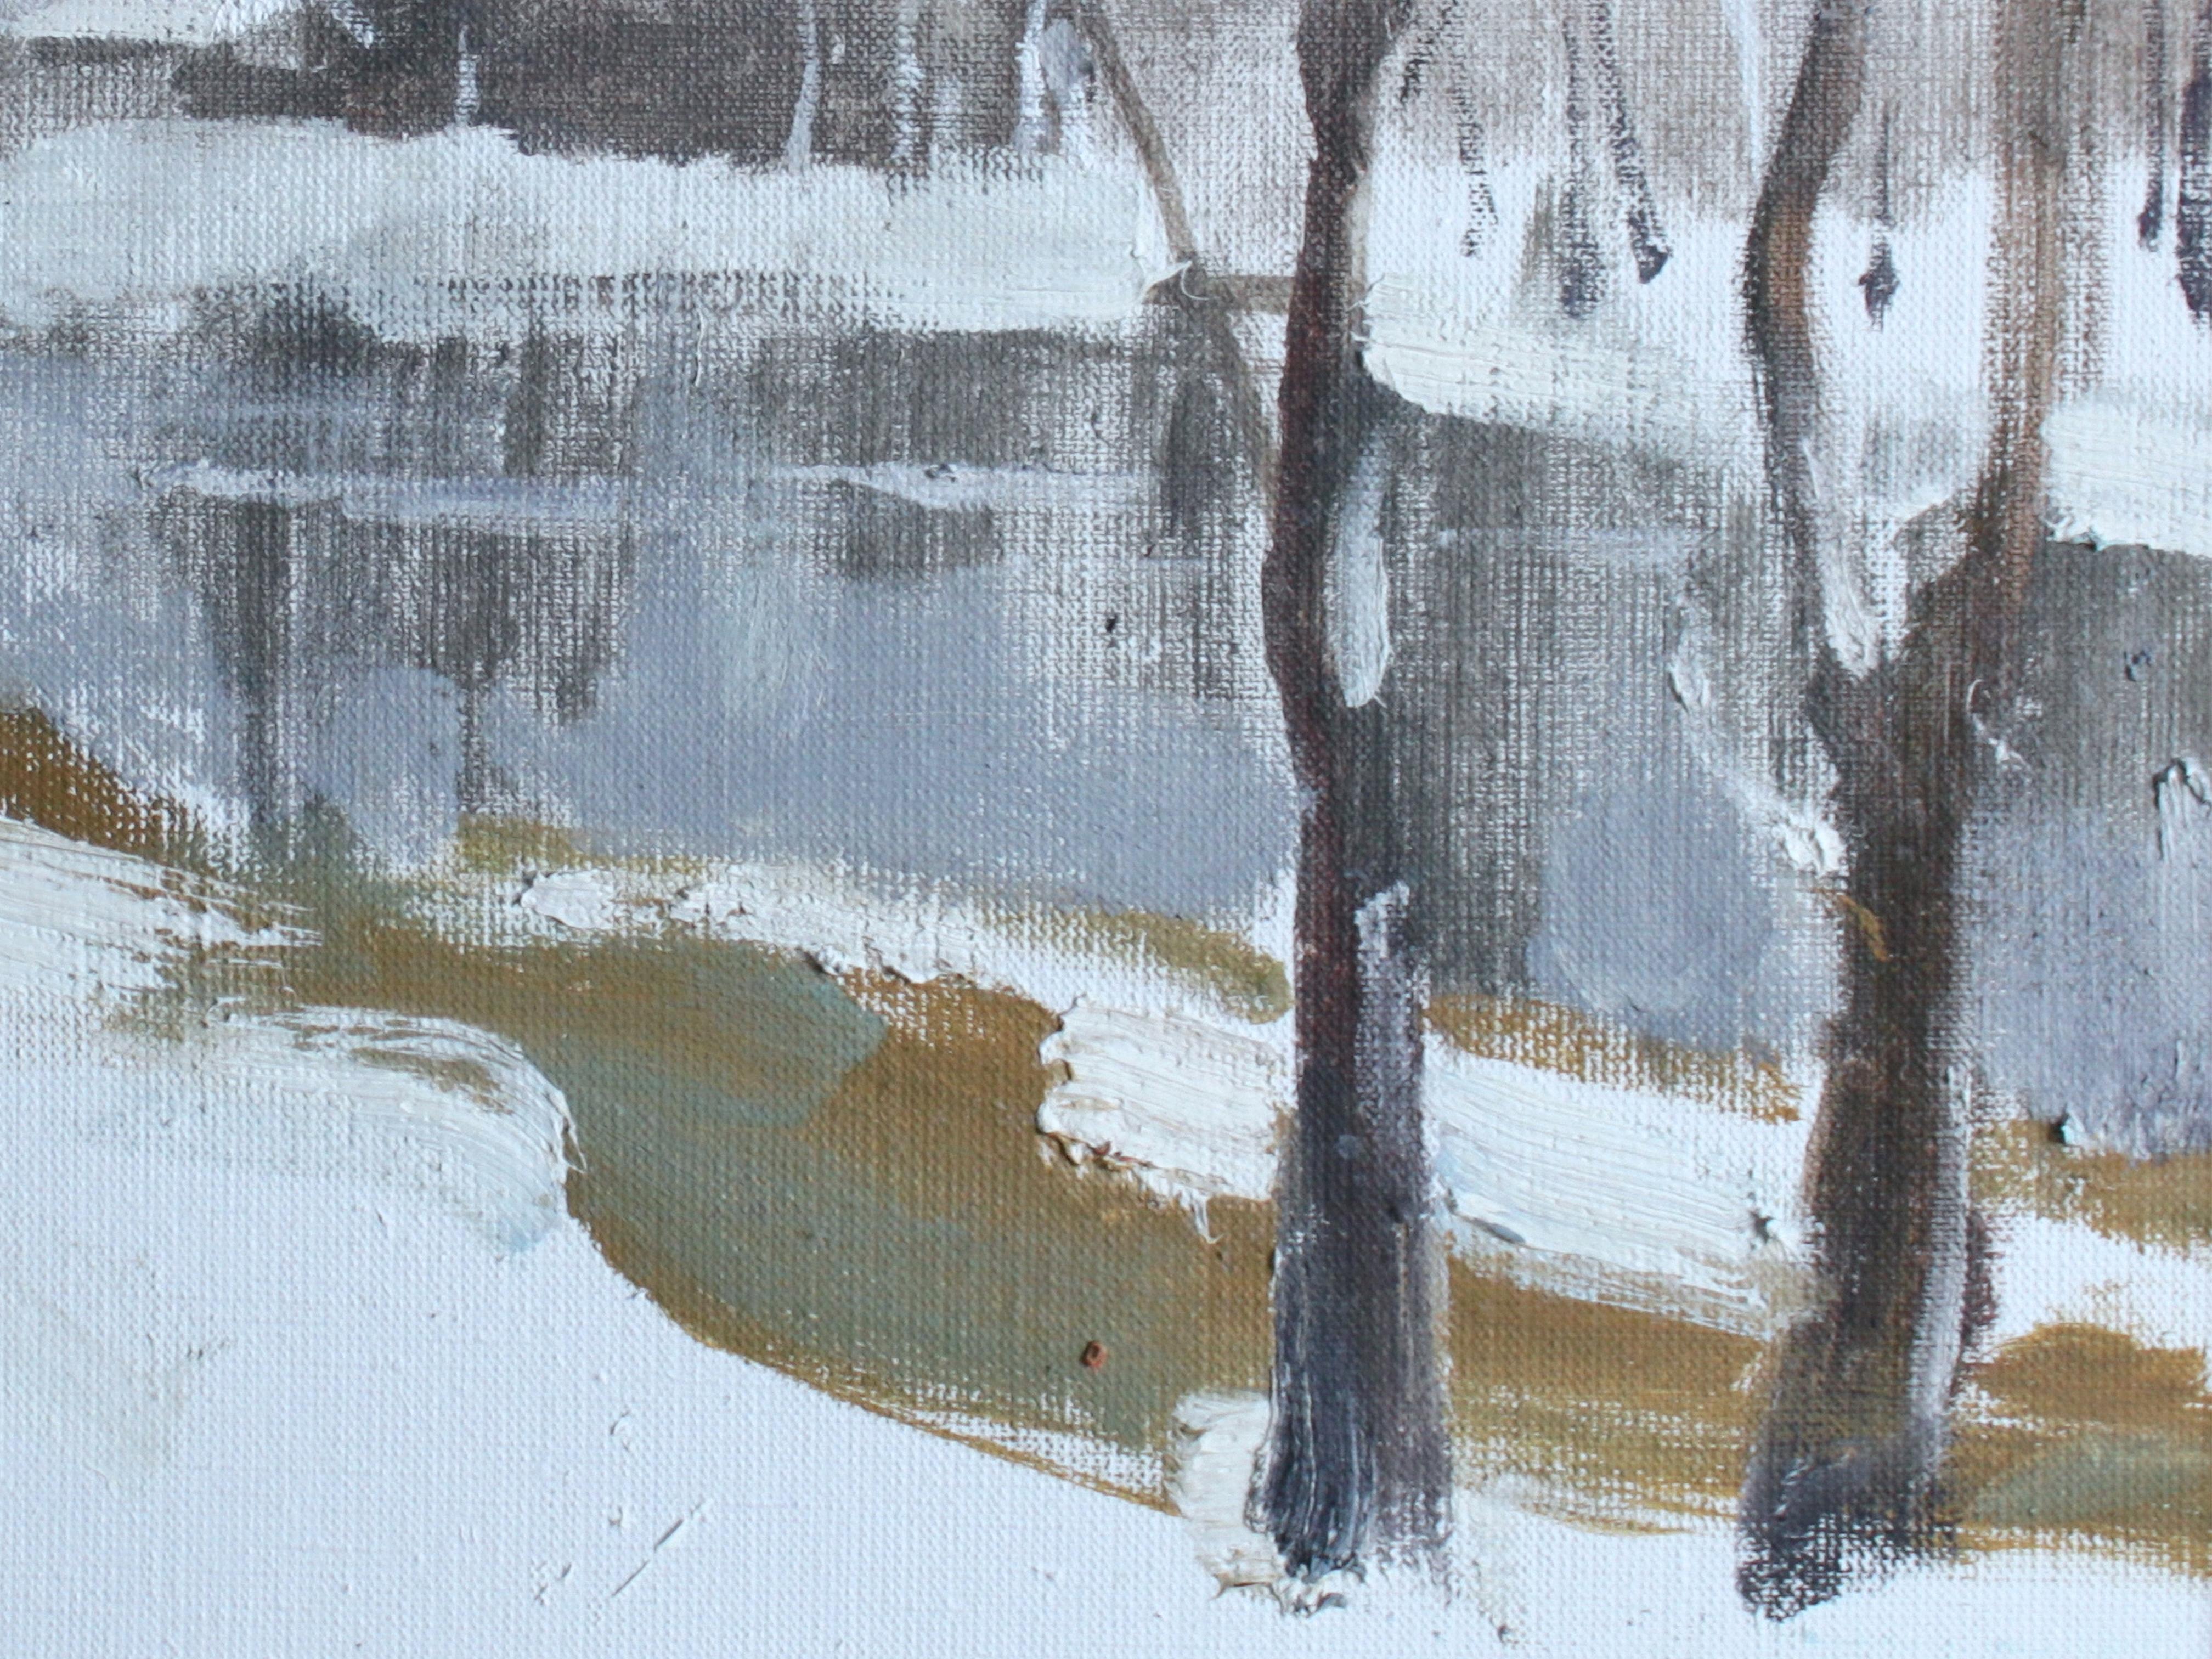 Lapua. Finland - 21st Century Contemporary Impressionist Nature Oil Painting - Gray Landscape Painting by Valeria Privalikhina